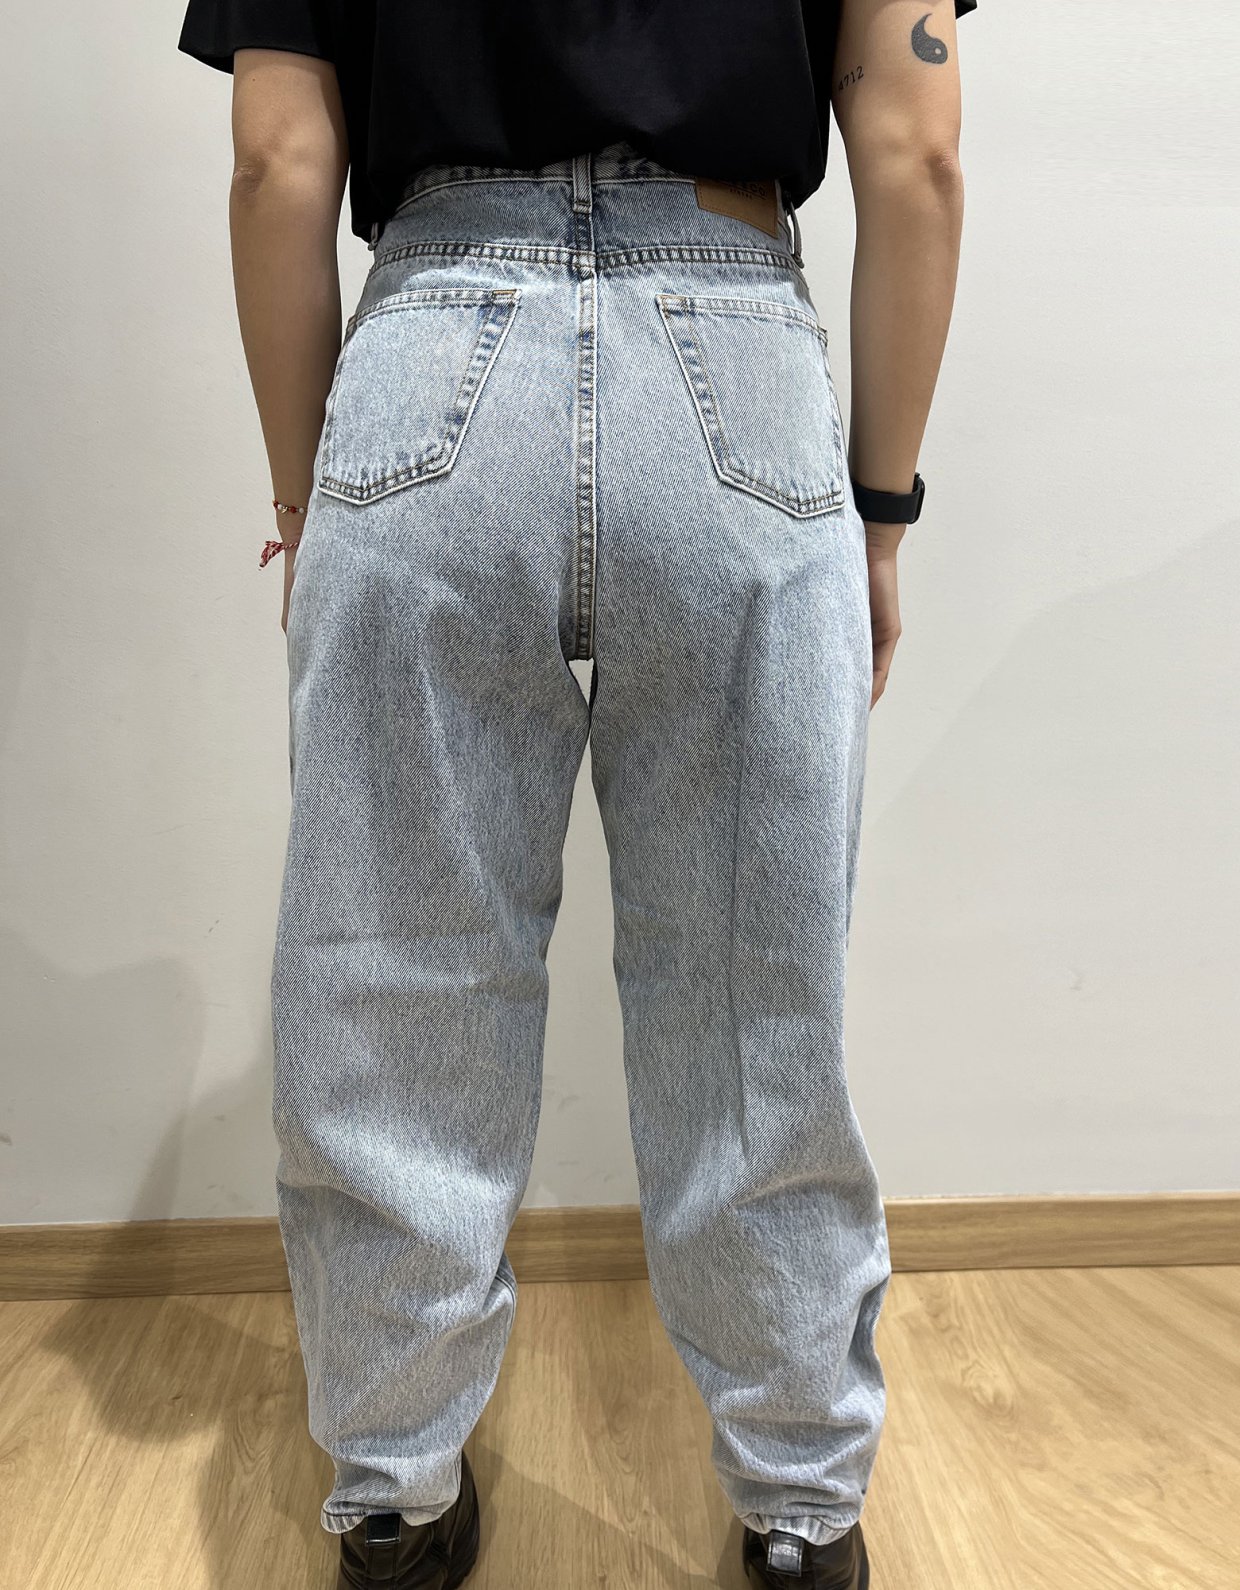 Sac & CO Jeans Lima slouchy light blue denim pants